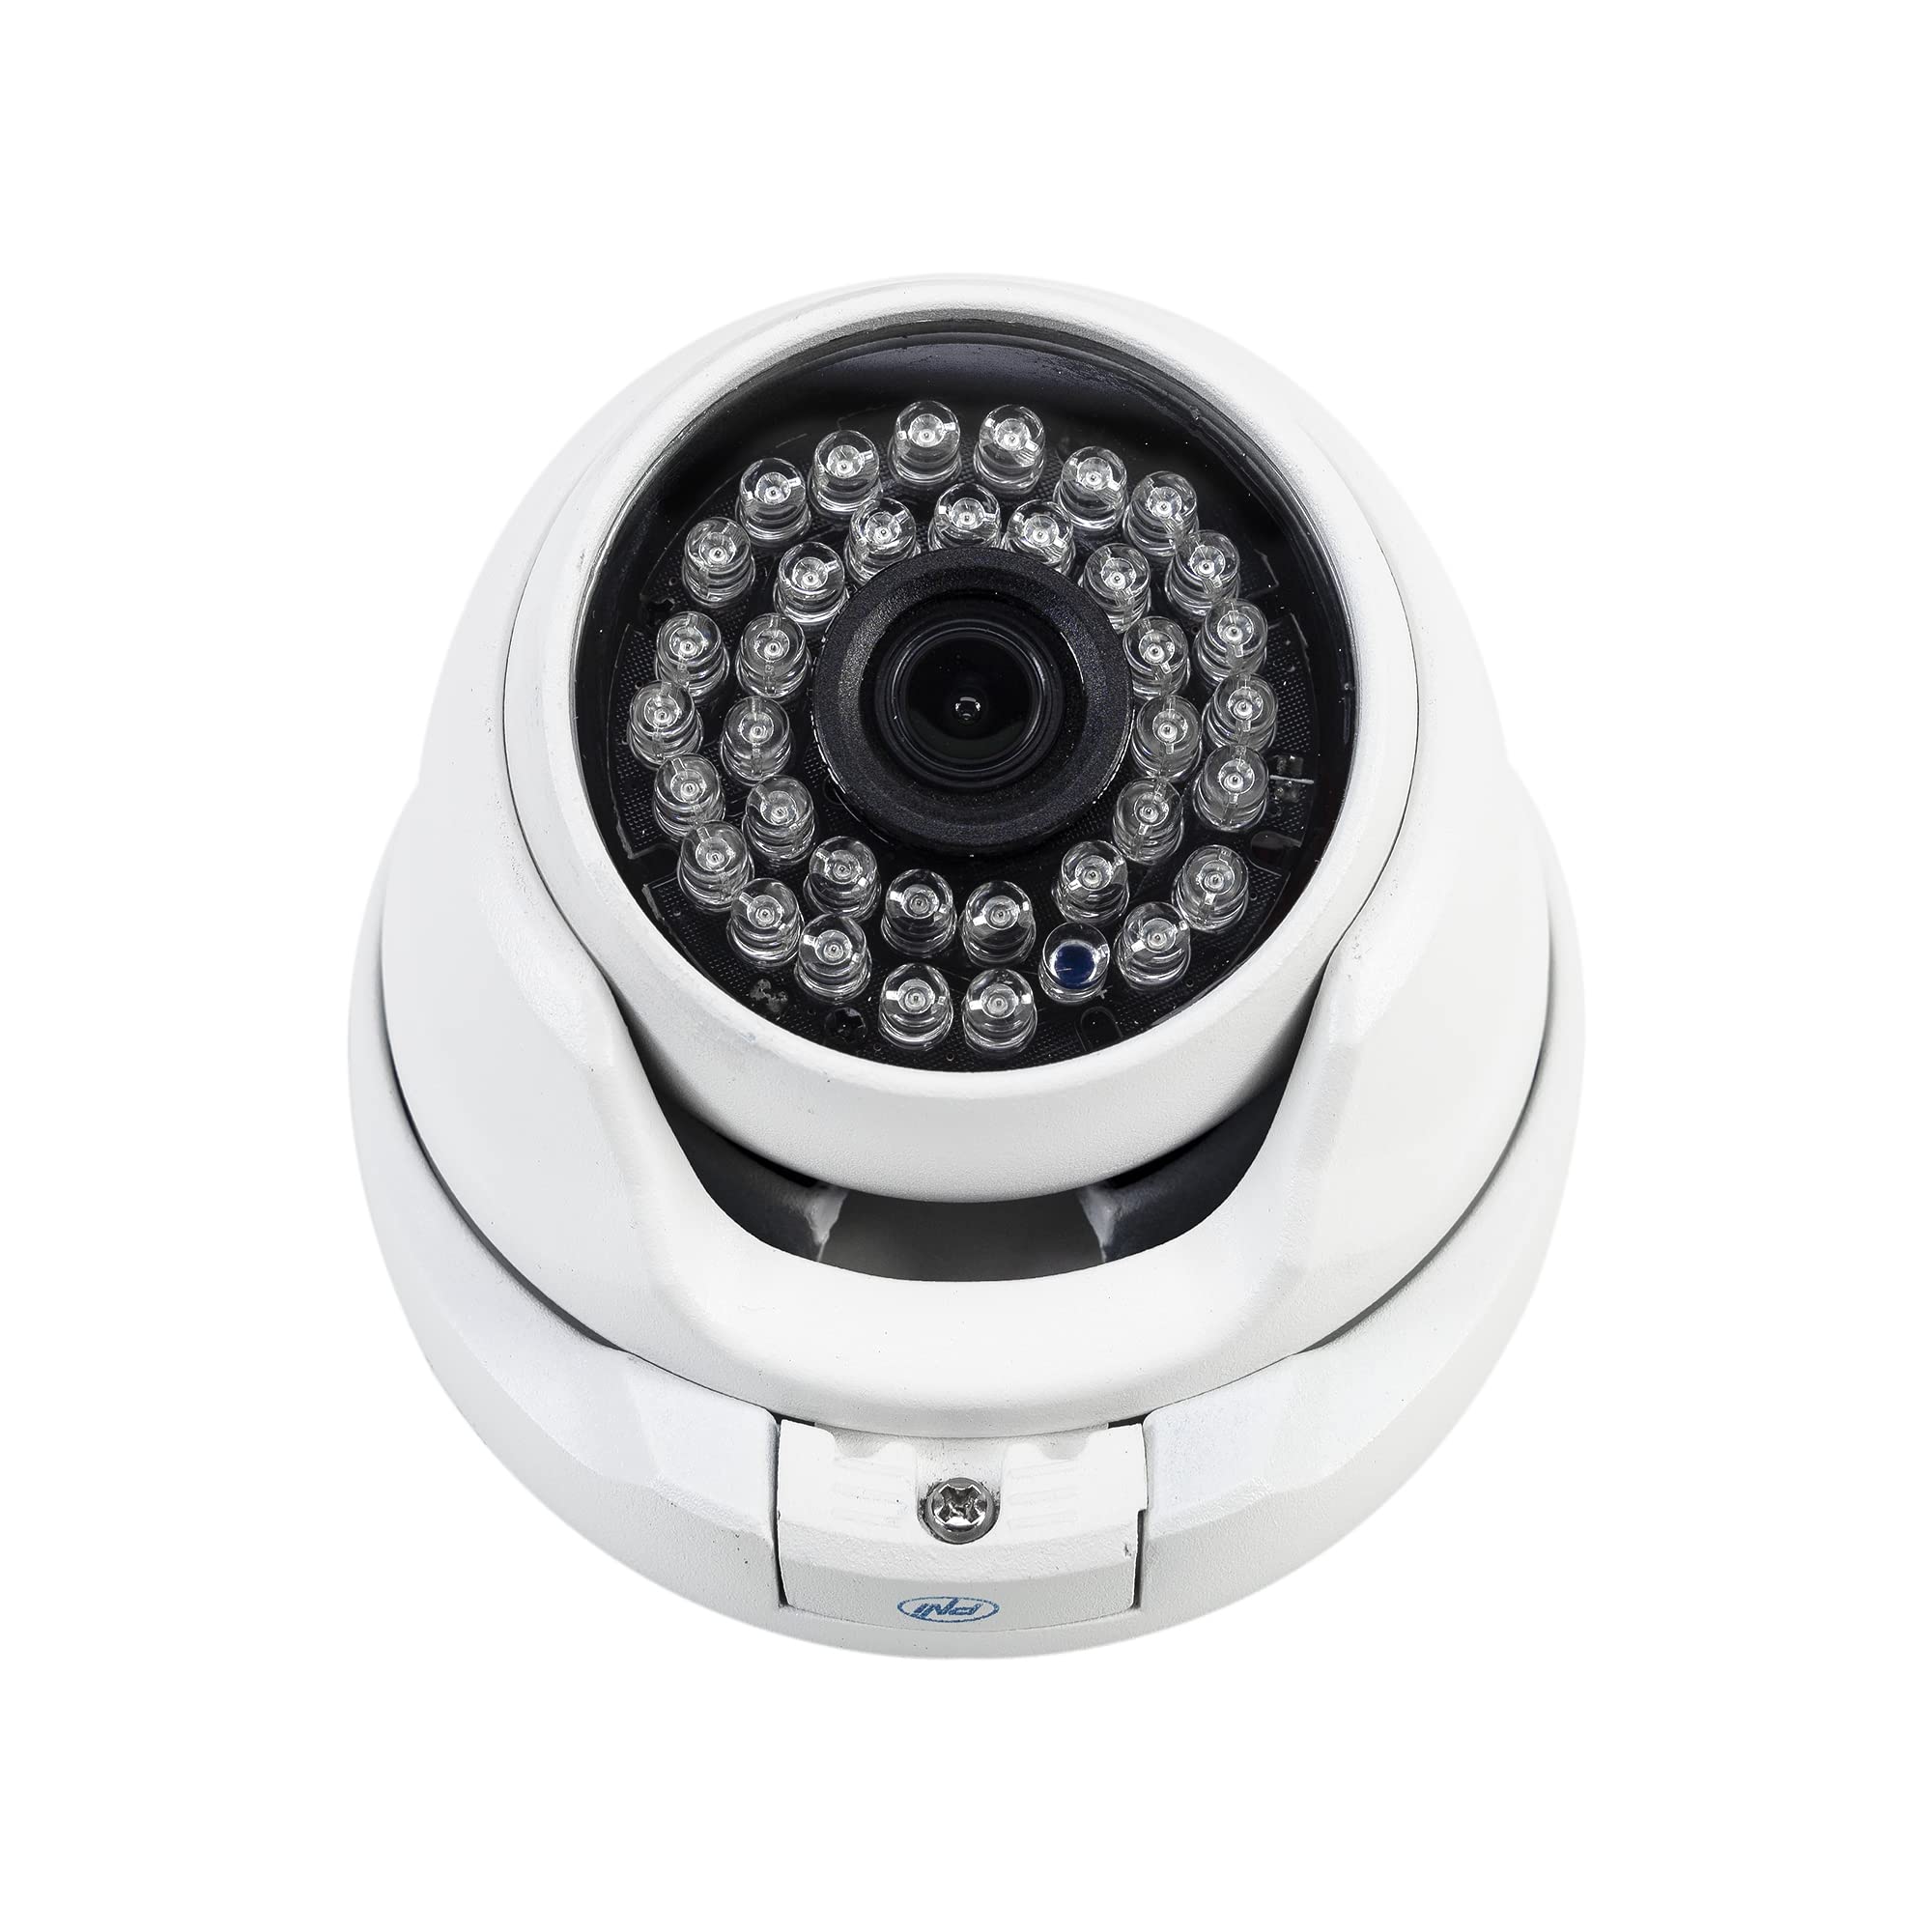 Videoüberwachungskamera PNI House AHD25 5 MP, Kuppel, 3,6-mm-Objektiv, 36 IR-LEDs, Außen- oder Innenbereich, IP66